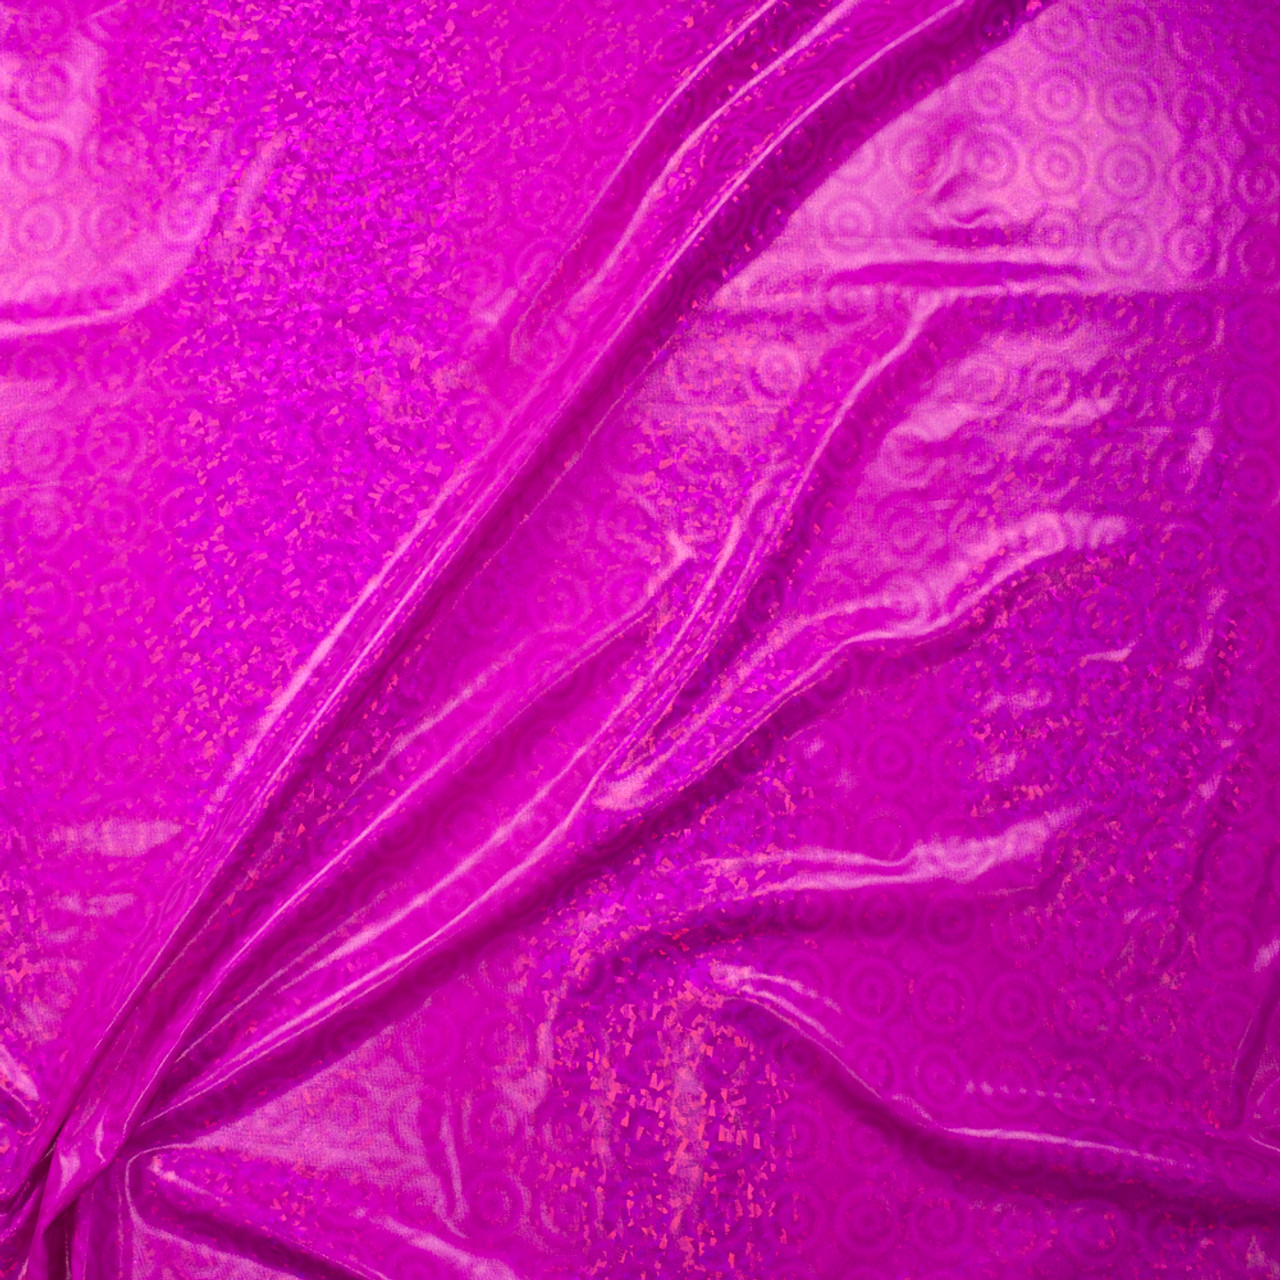 Cali Fabrics Hot Pink, Tan, and Black Boho Stripe Rayon Gauze